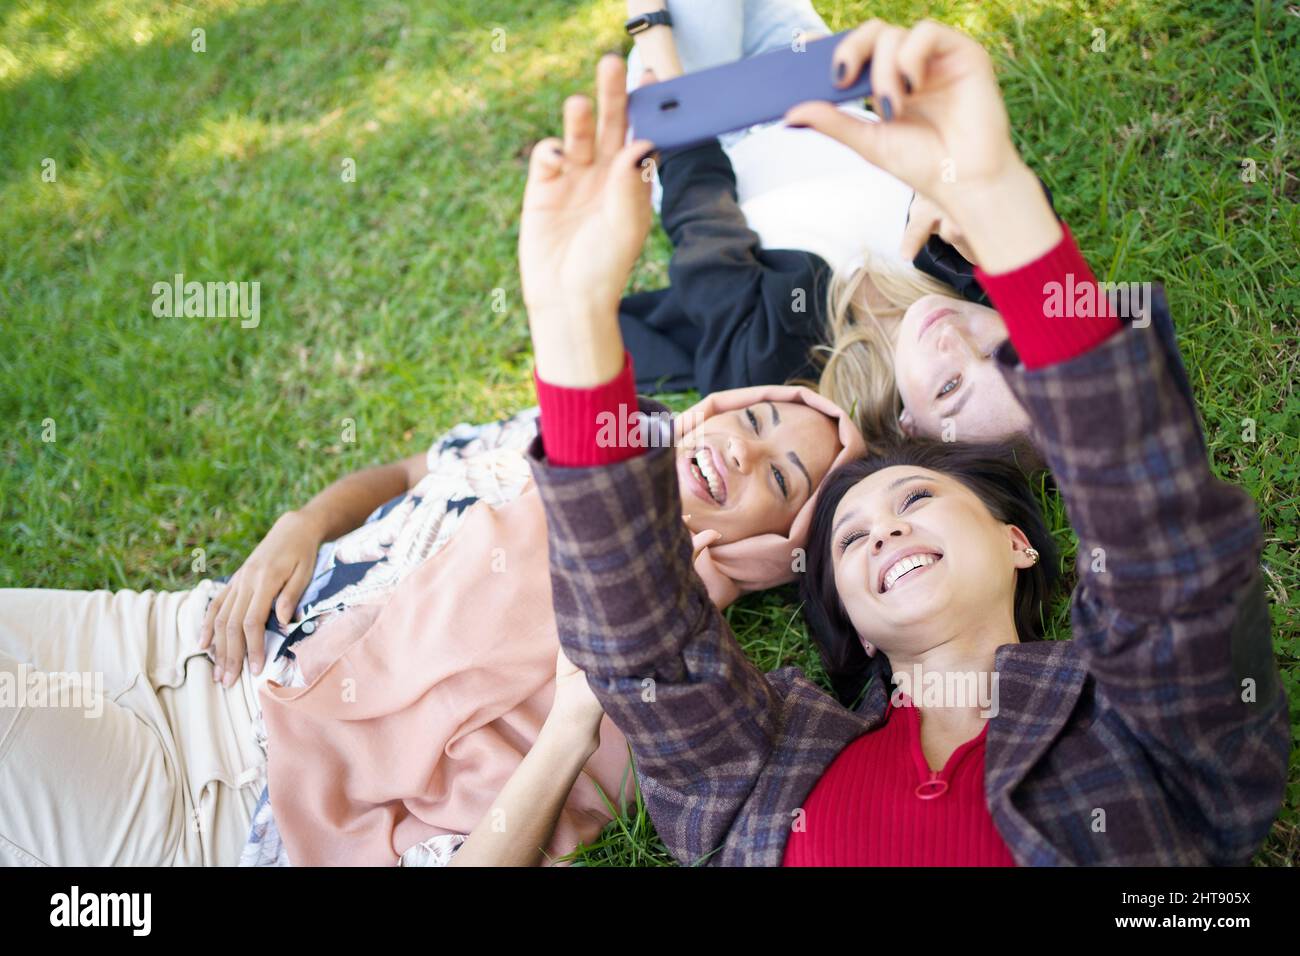 Cheerful diverse women taking selfie on lawn Stock Photo